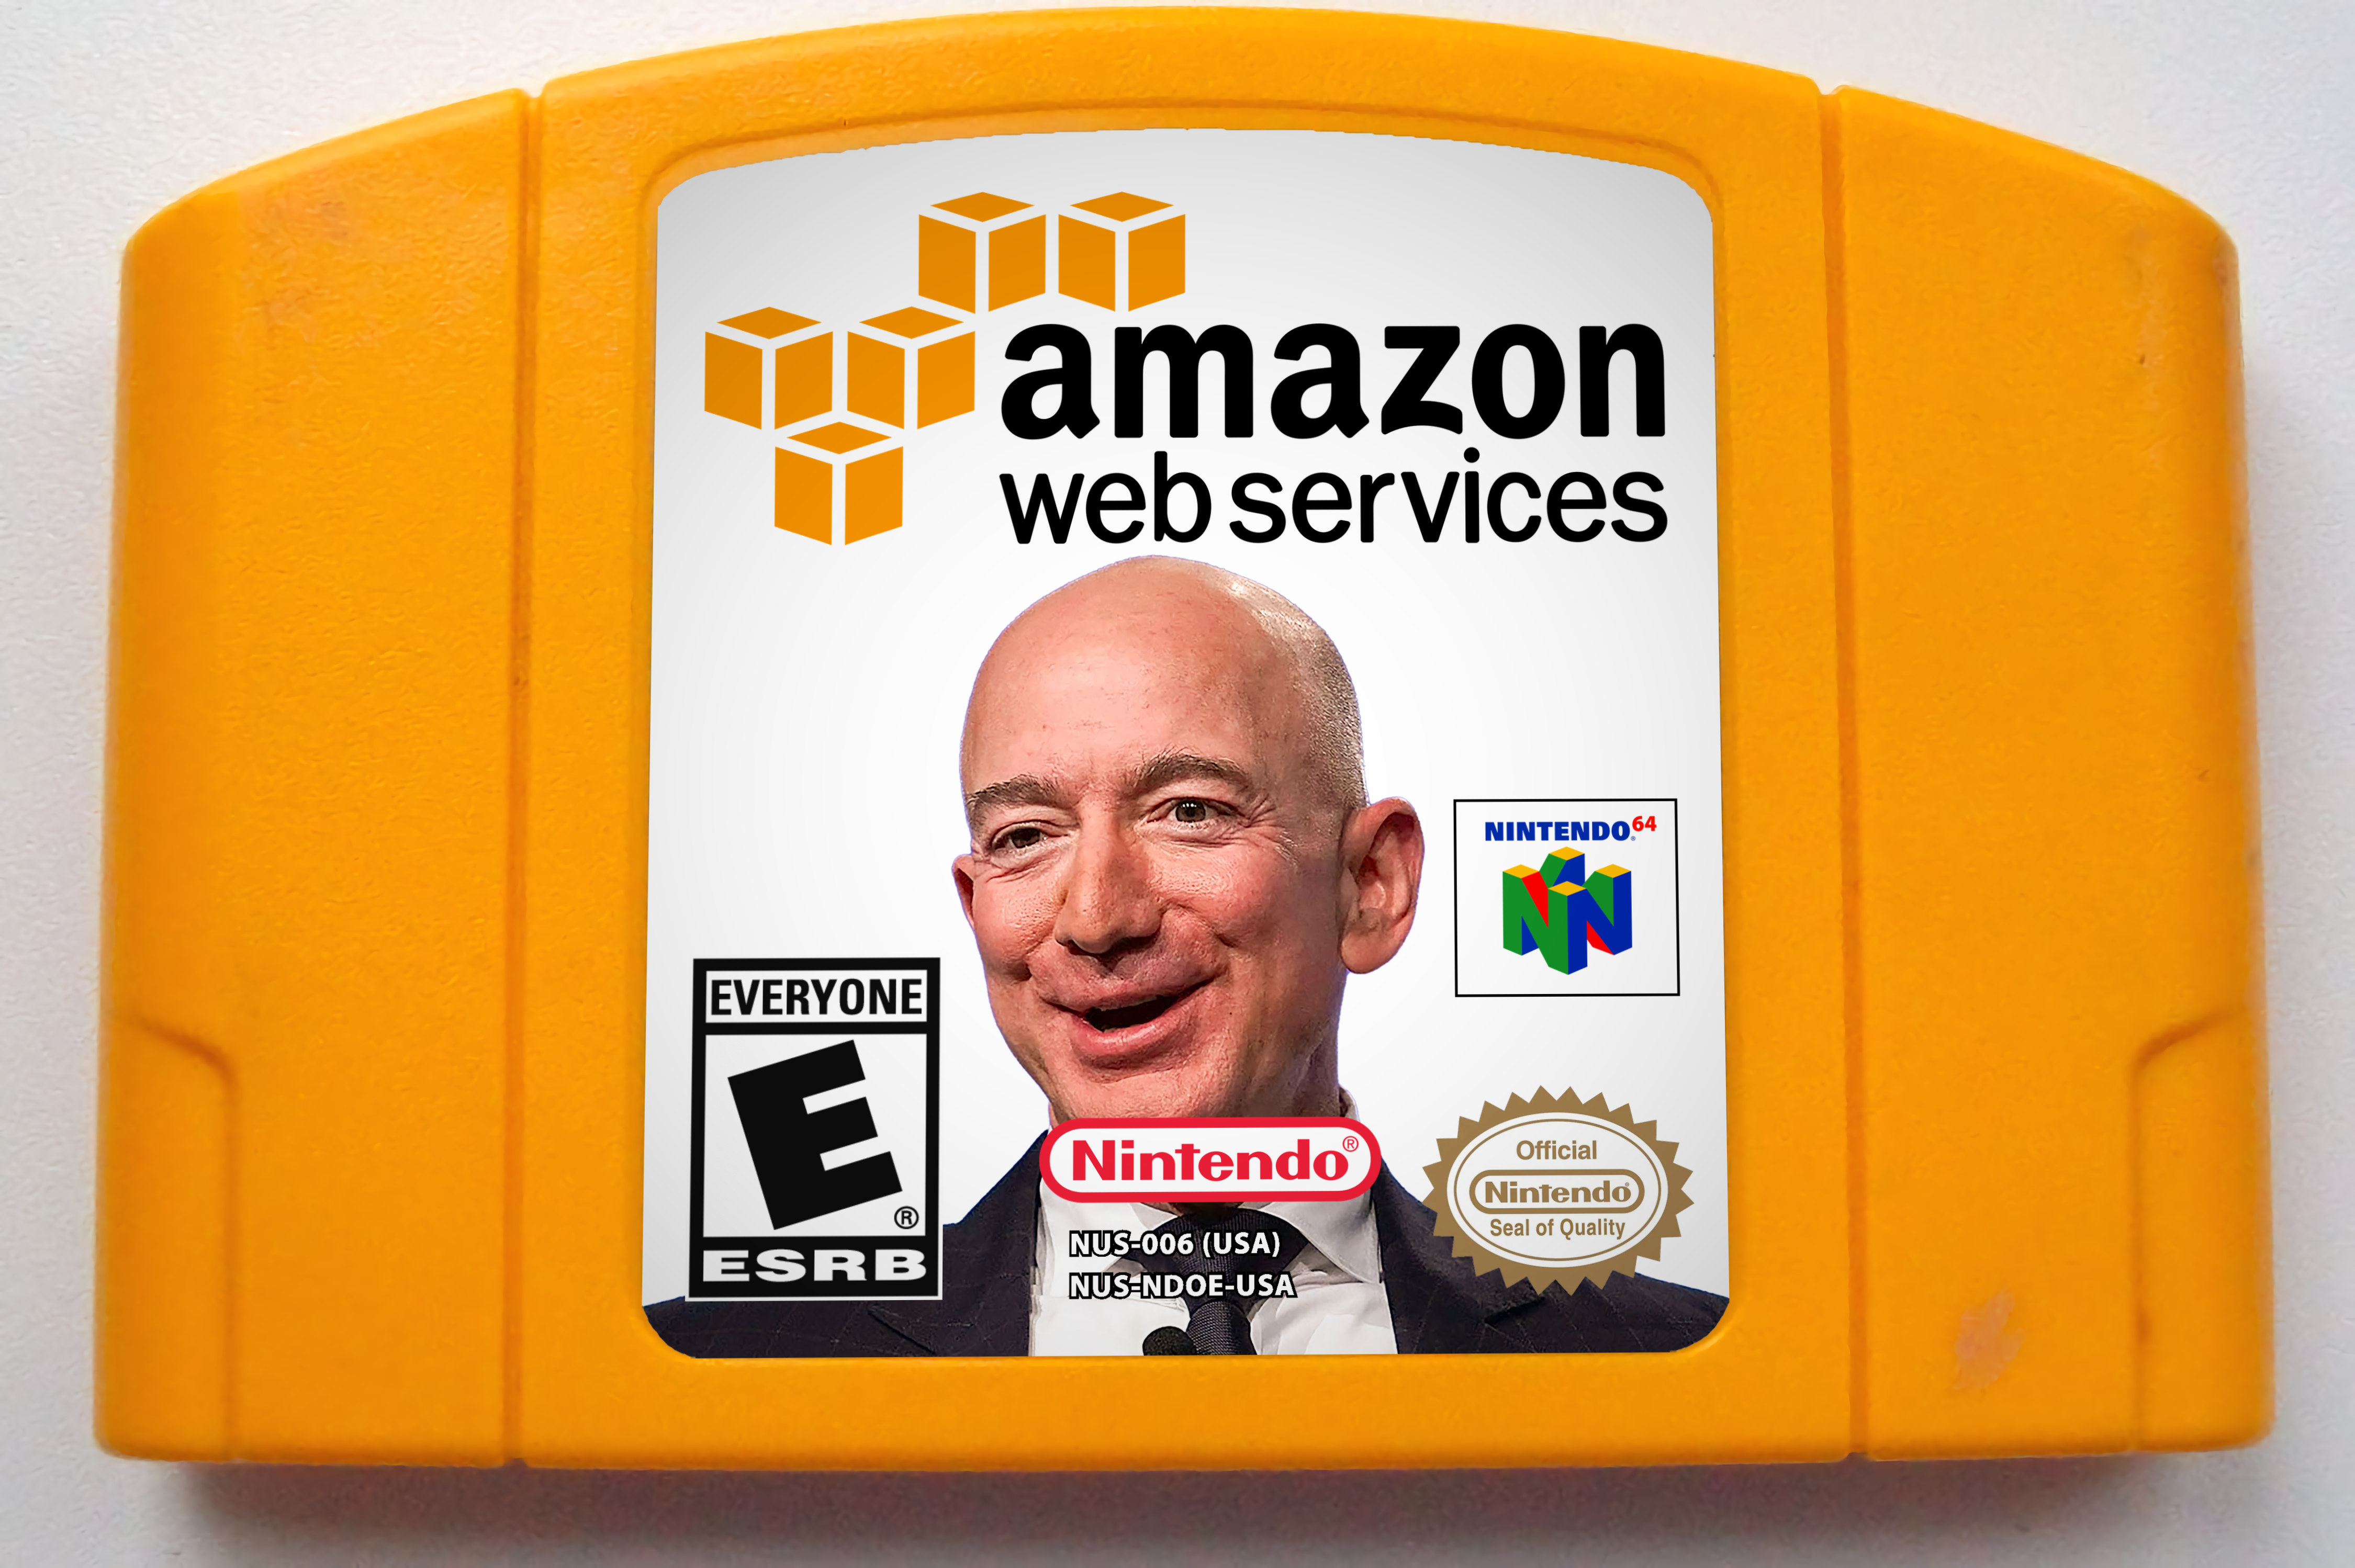 Amazon Web Services cartridge for the Nintendo 64 featuring Jeff Bezo’s portrait on the label.